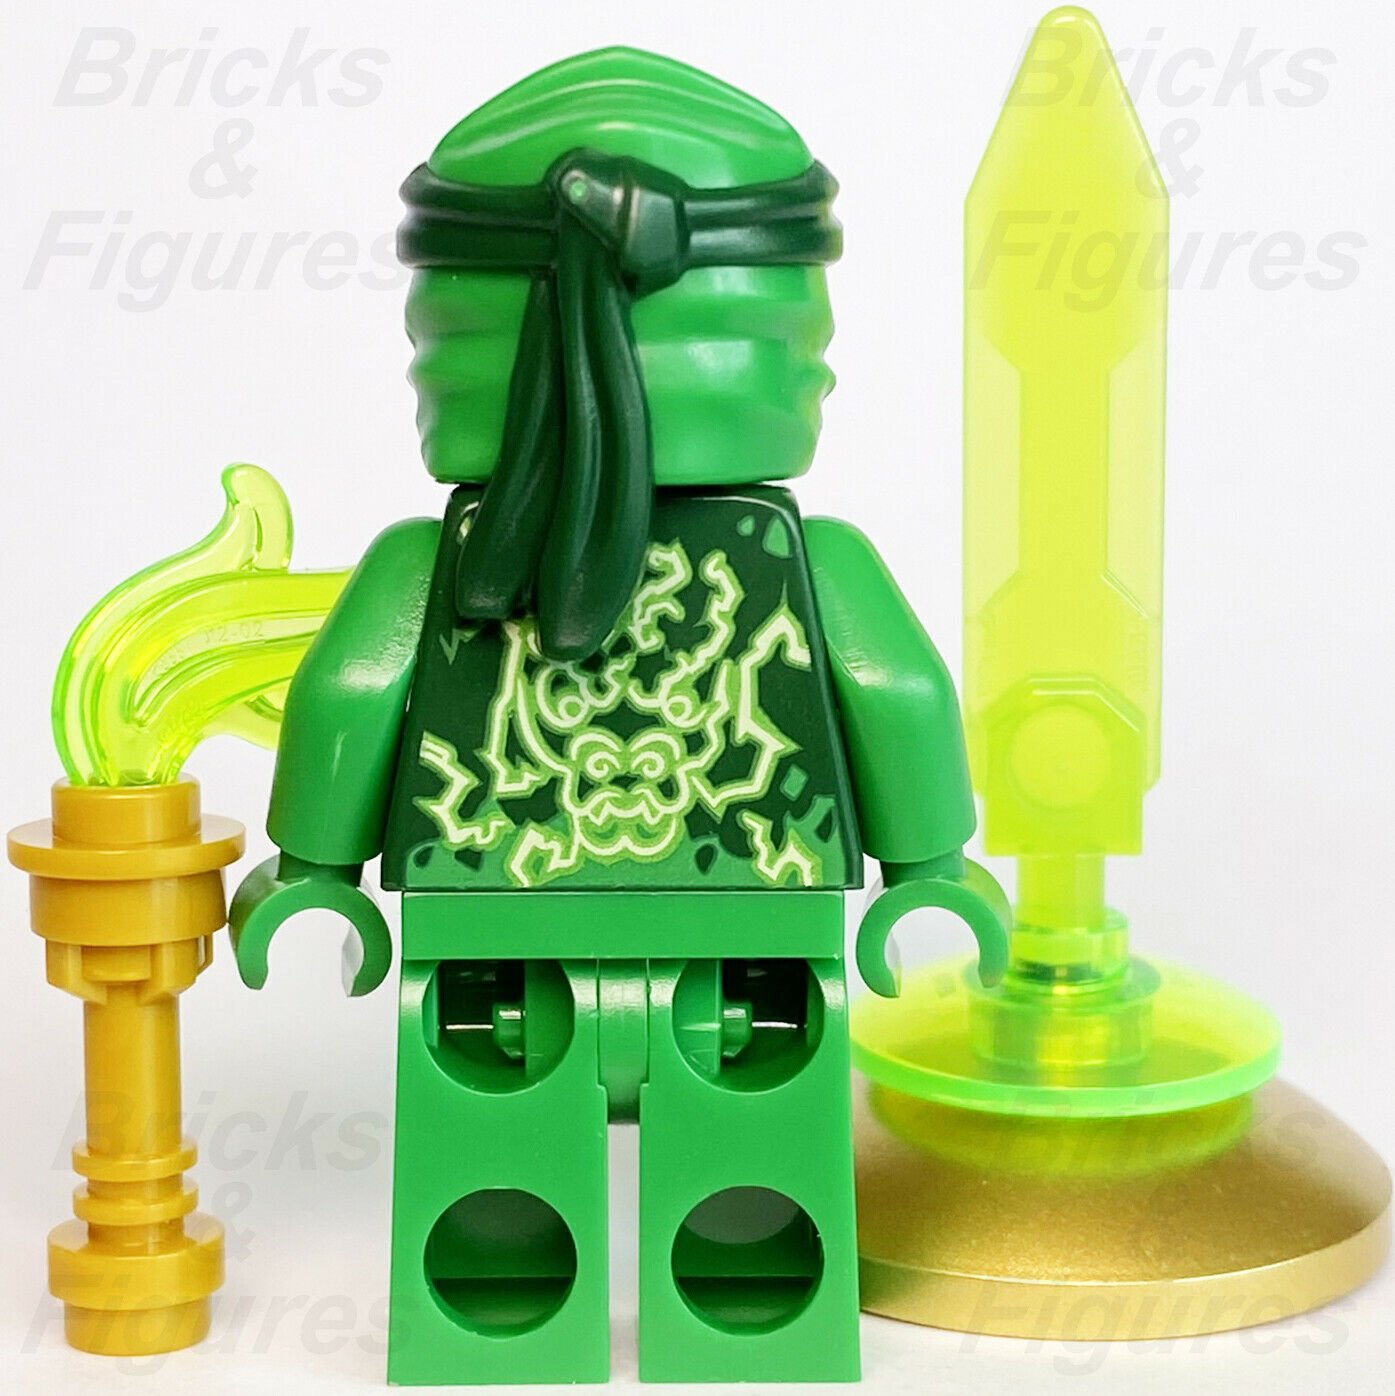 Ninjago LEGO Lloyd Garmadon Spinjitzu Blast Ninja Minifigure 892172 njo619 - Bricks & Figures